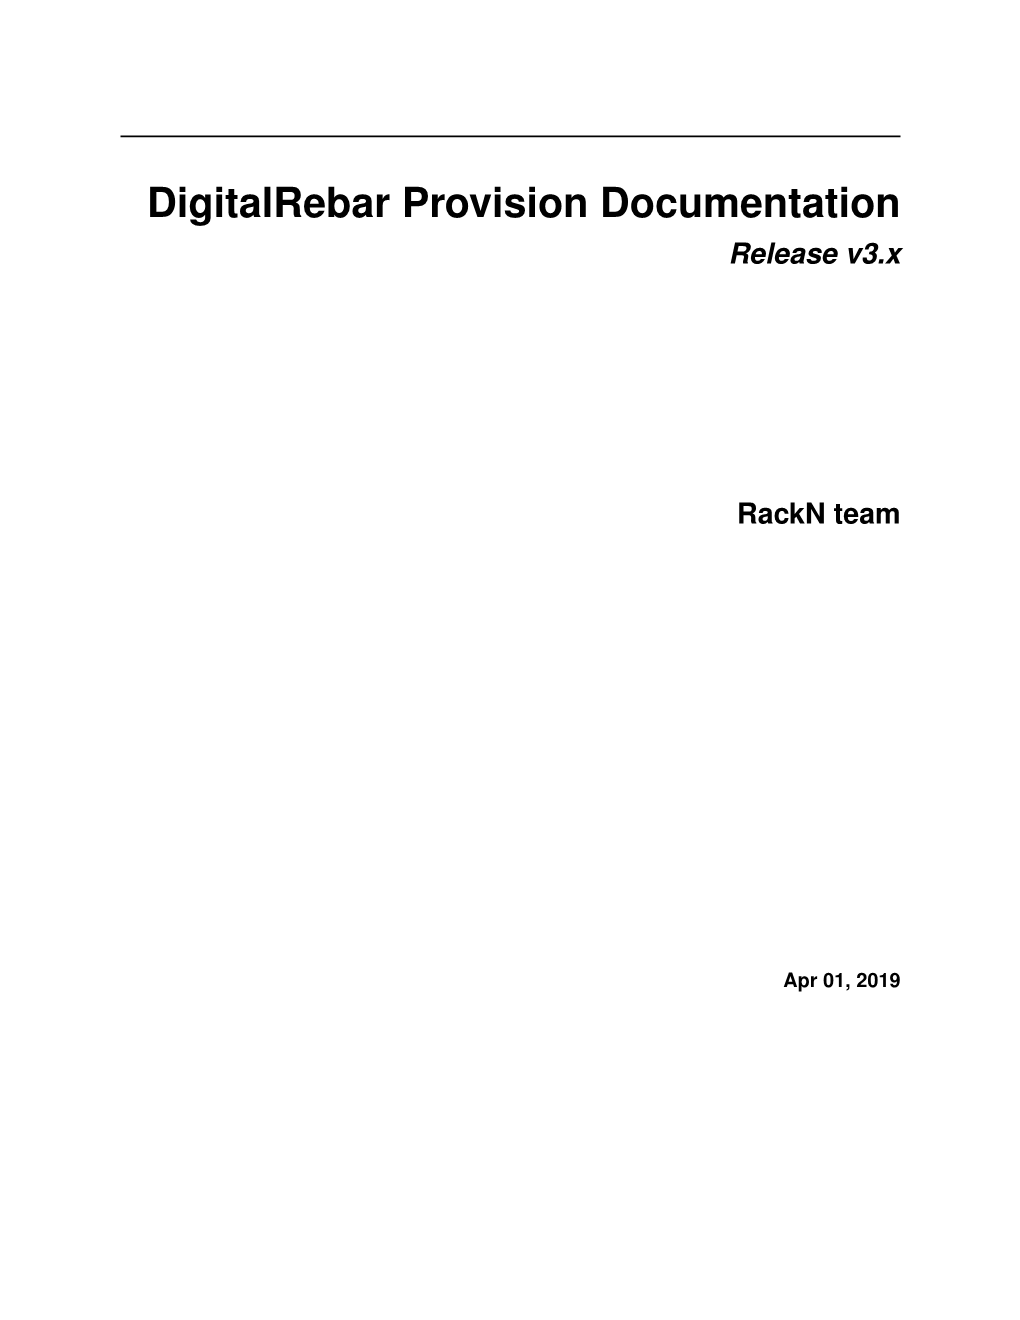 Digitalrebar Provision Documentation Release V3.X